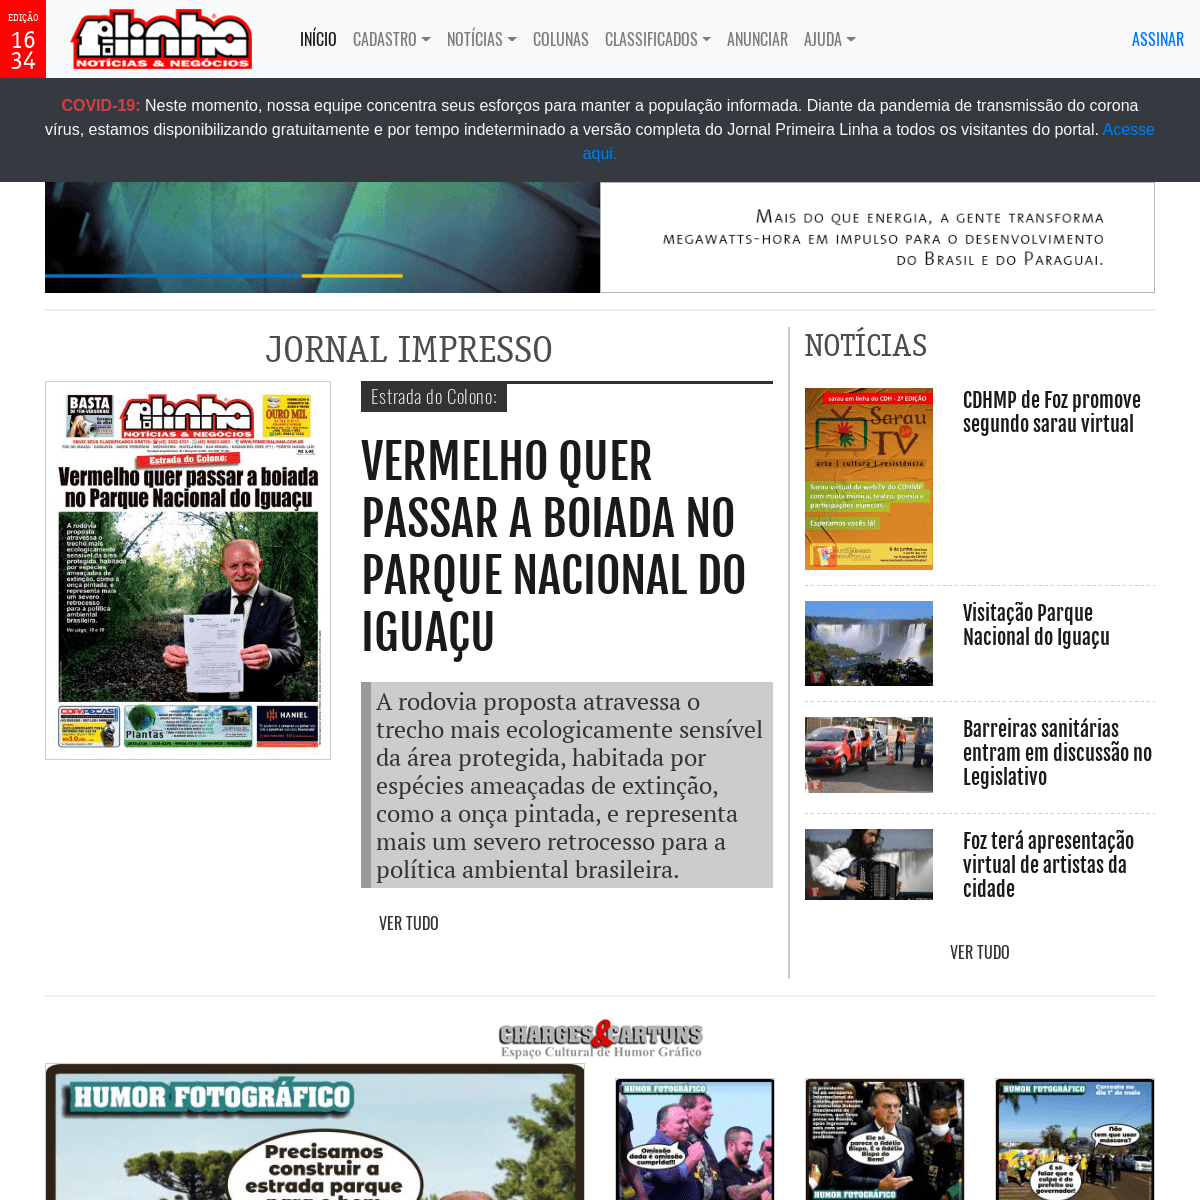 A complete backup of https://primeiralinha.com.br